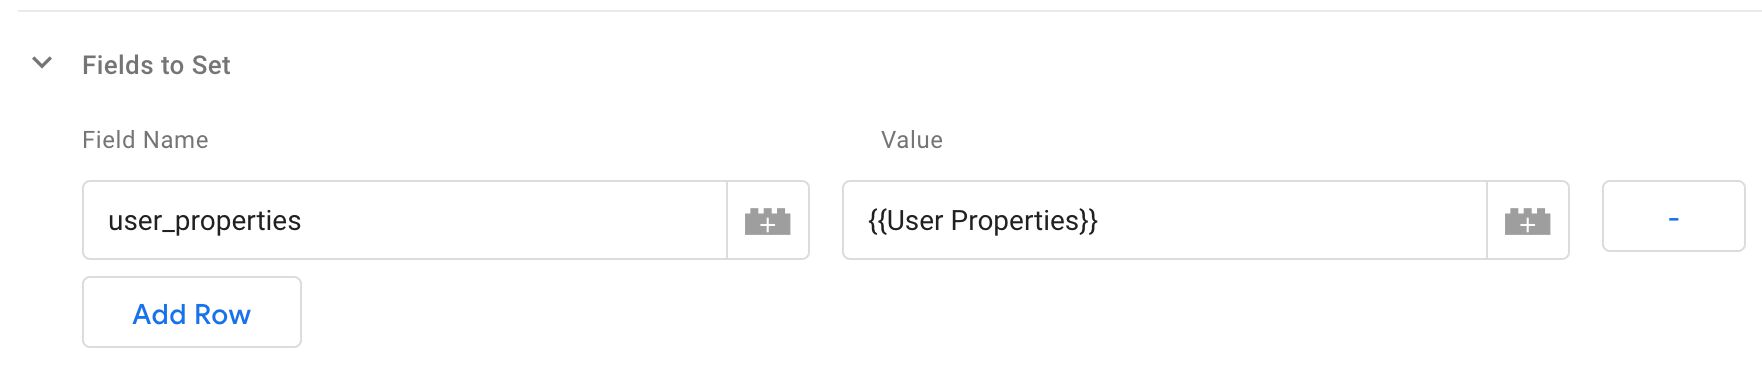 User properties in tag